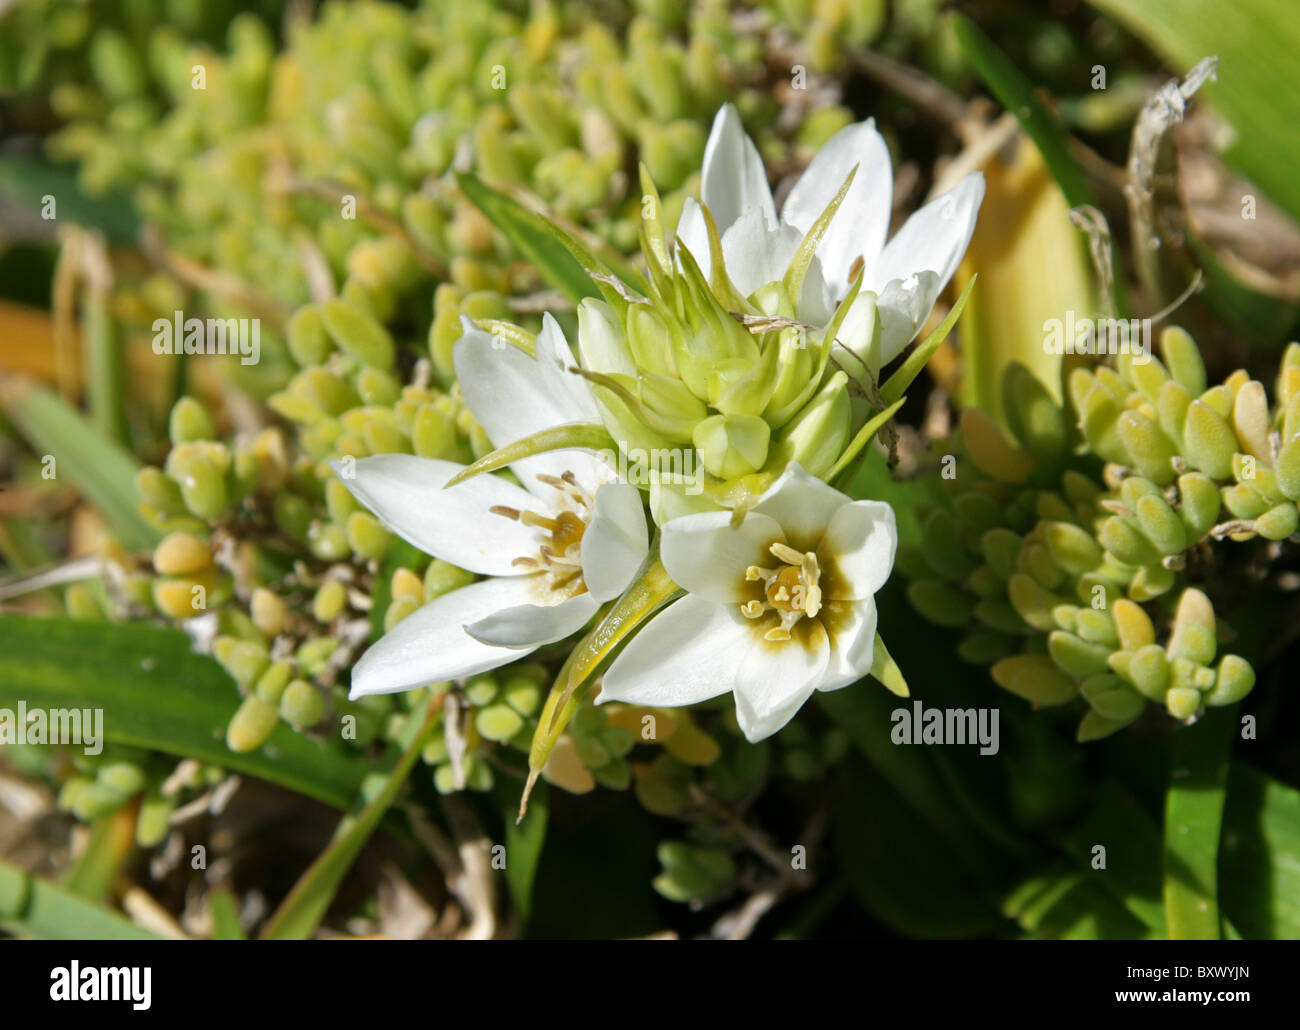 Cape Chincherinchee, Chinkerinchee, Crema Starflower, sud-africaine fiore a stella, Ornithogalum thyrsoides, Hyacinthaceae S Africa Foto Stock